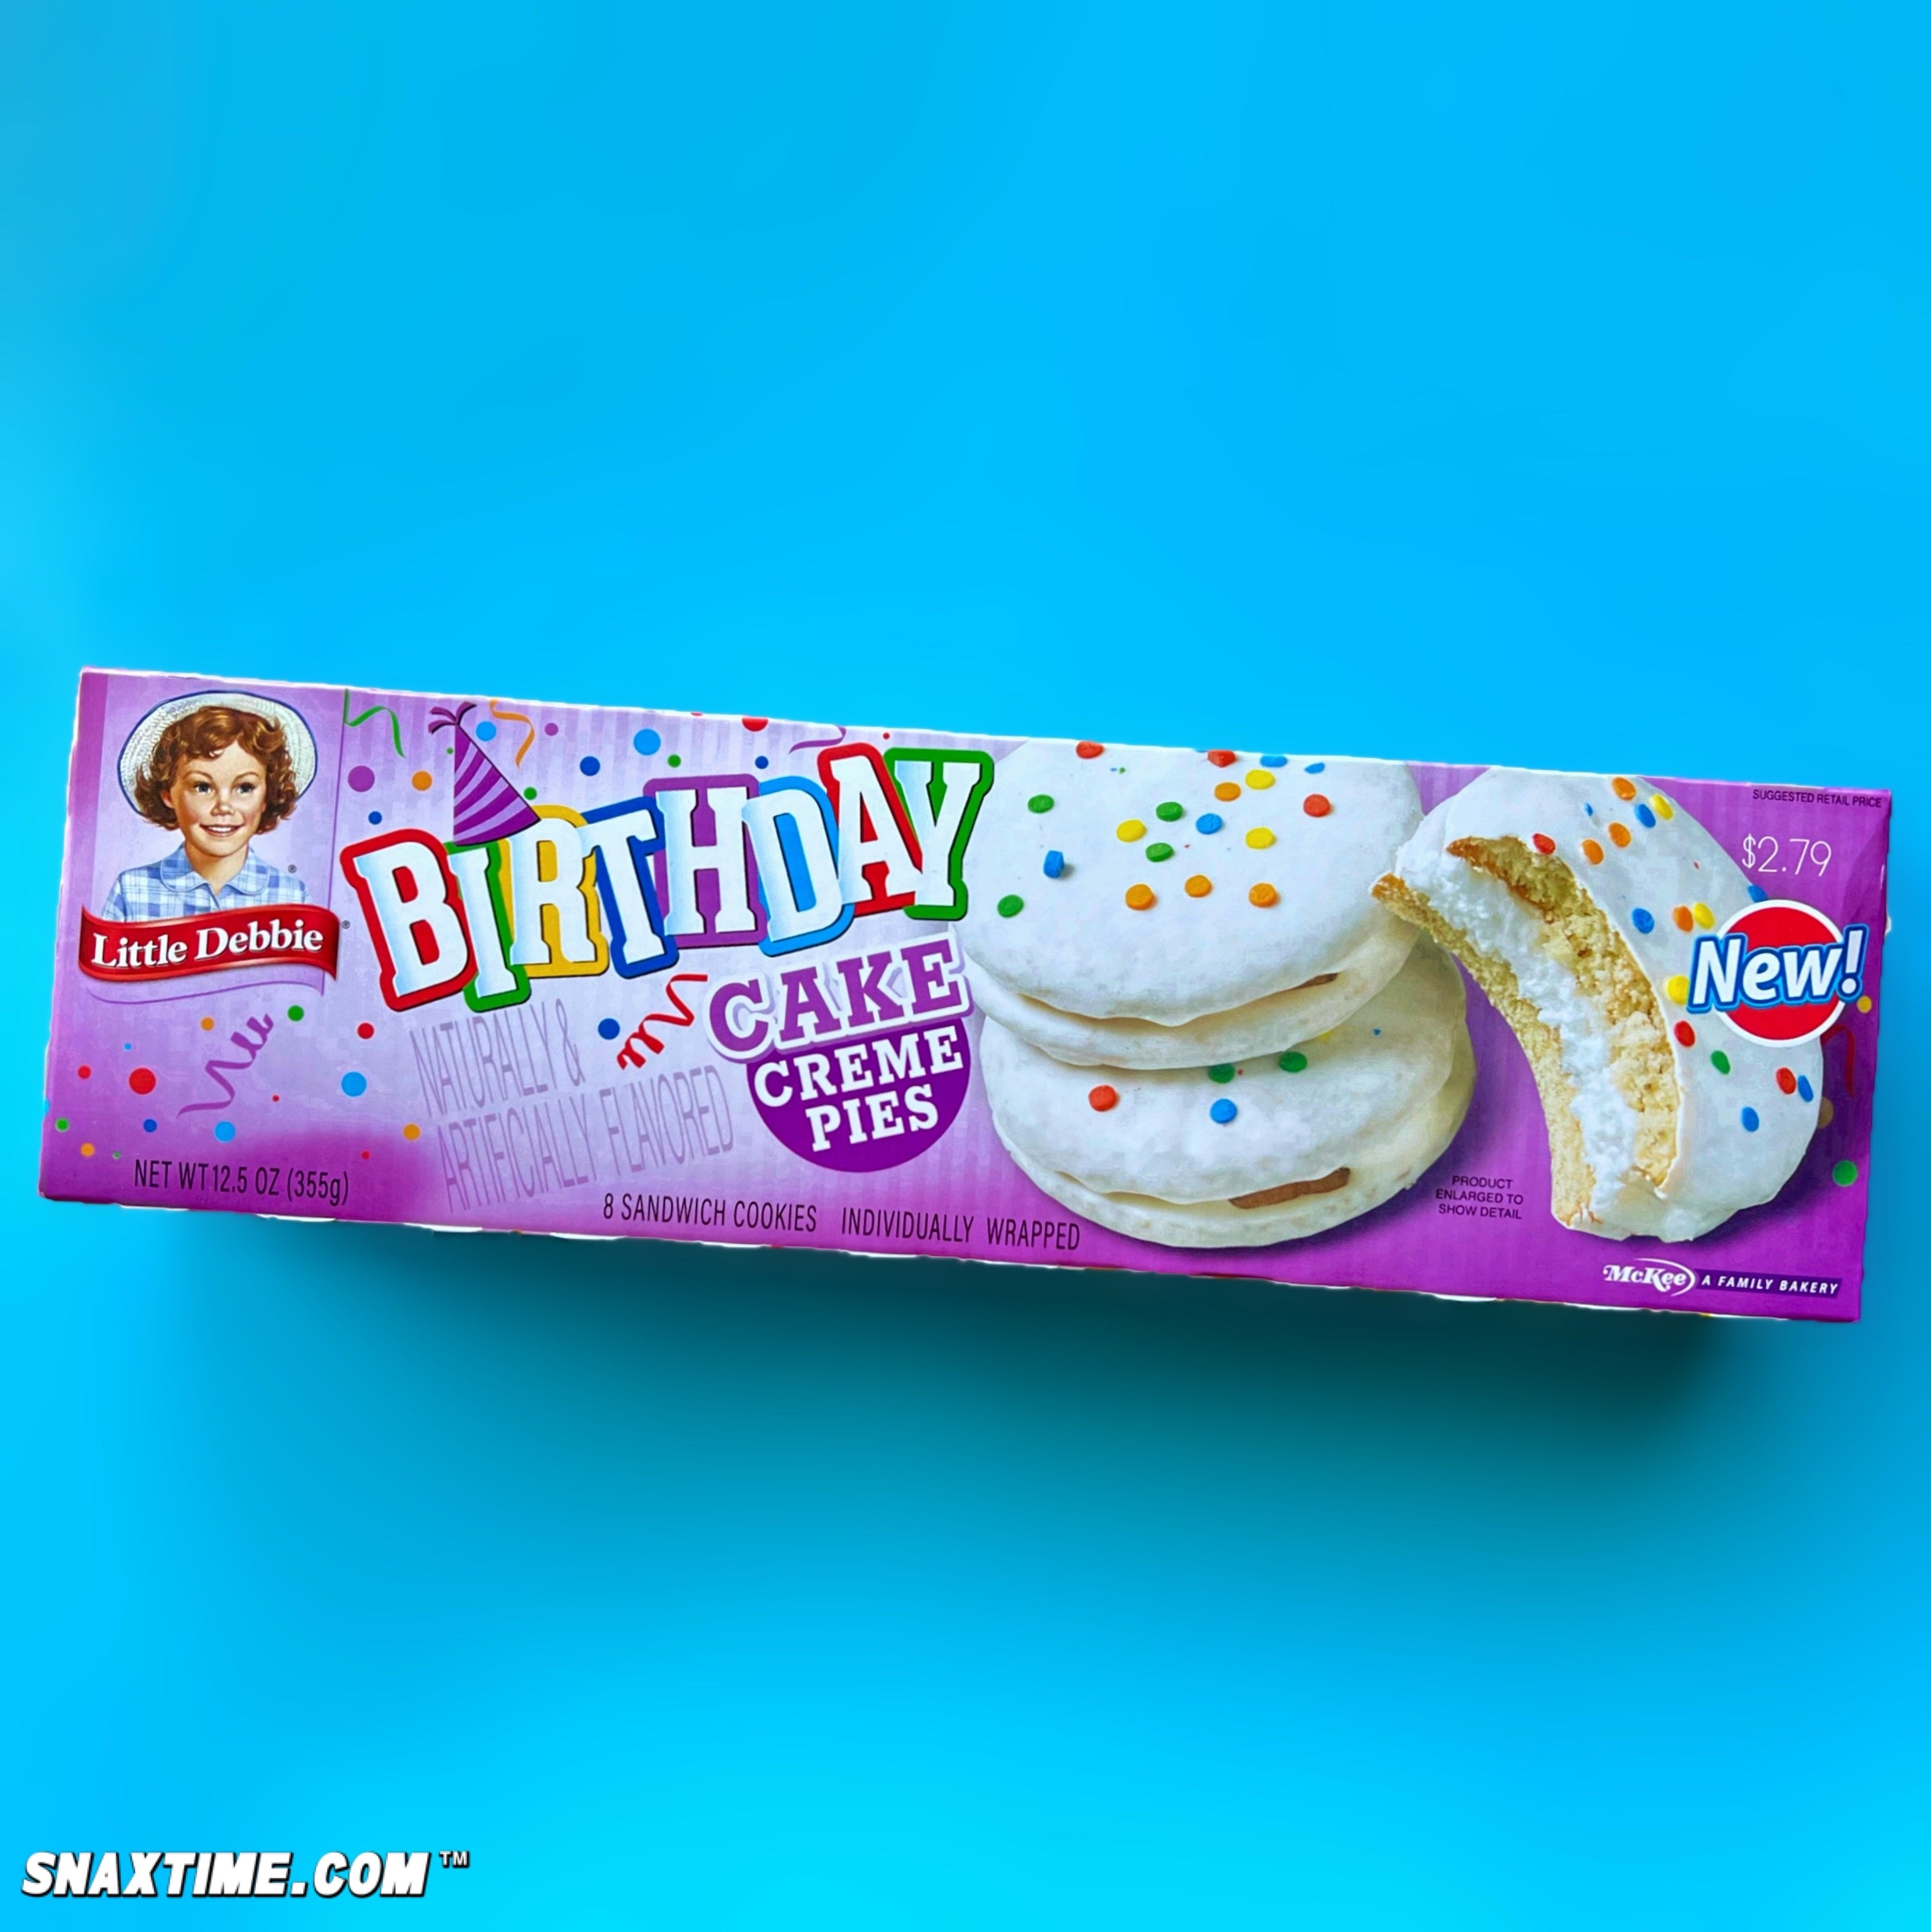 Little Debbie Birthday Cake Creme Pies Box